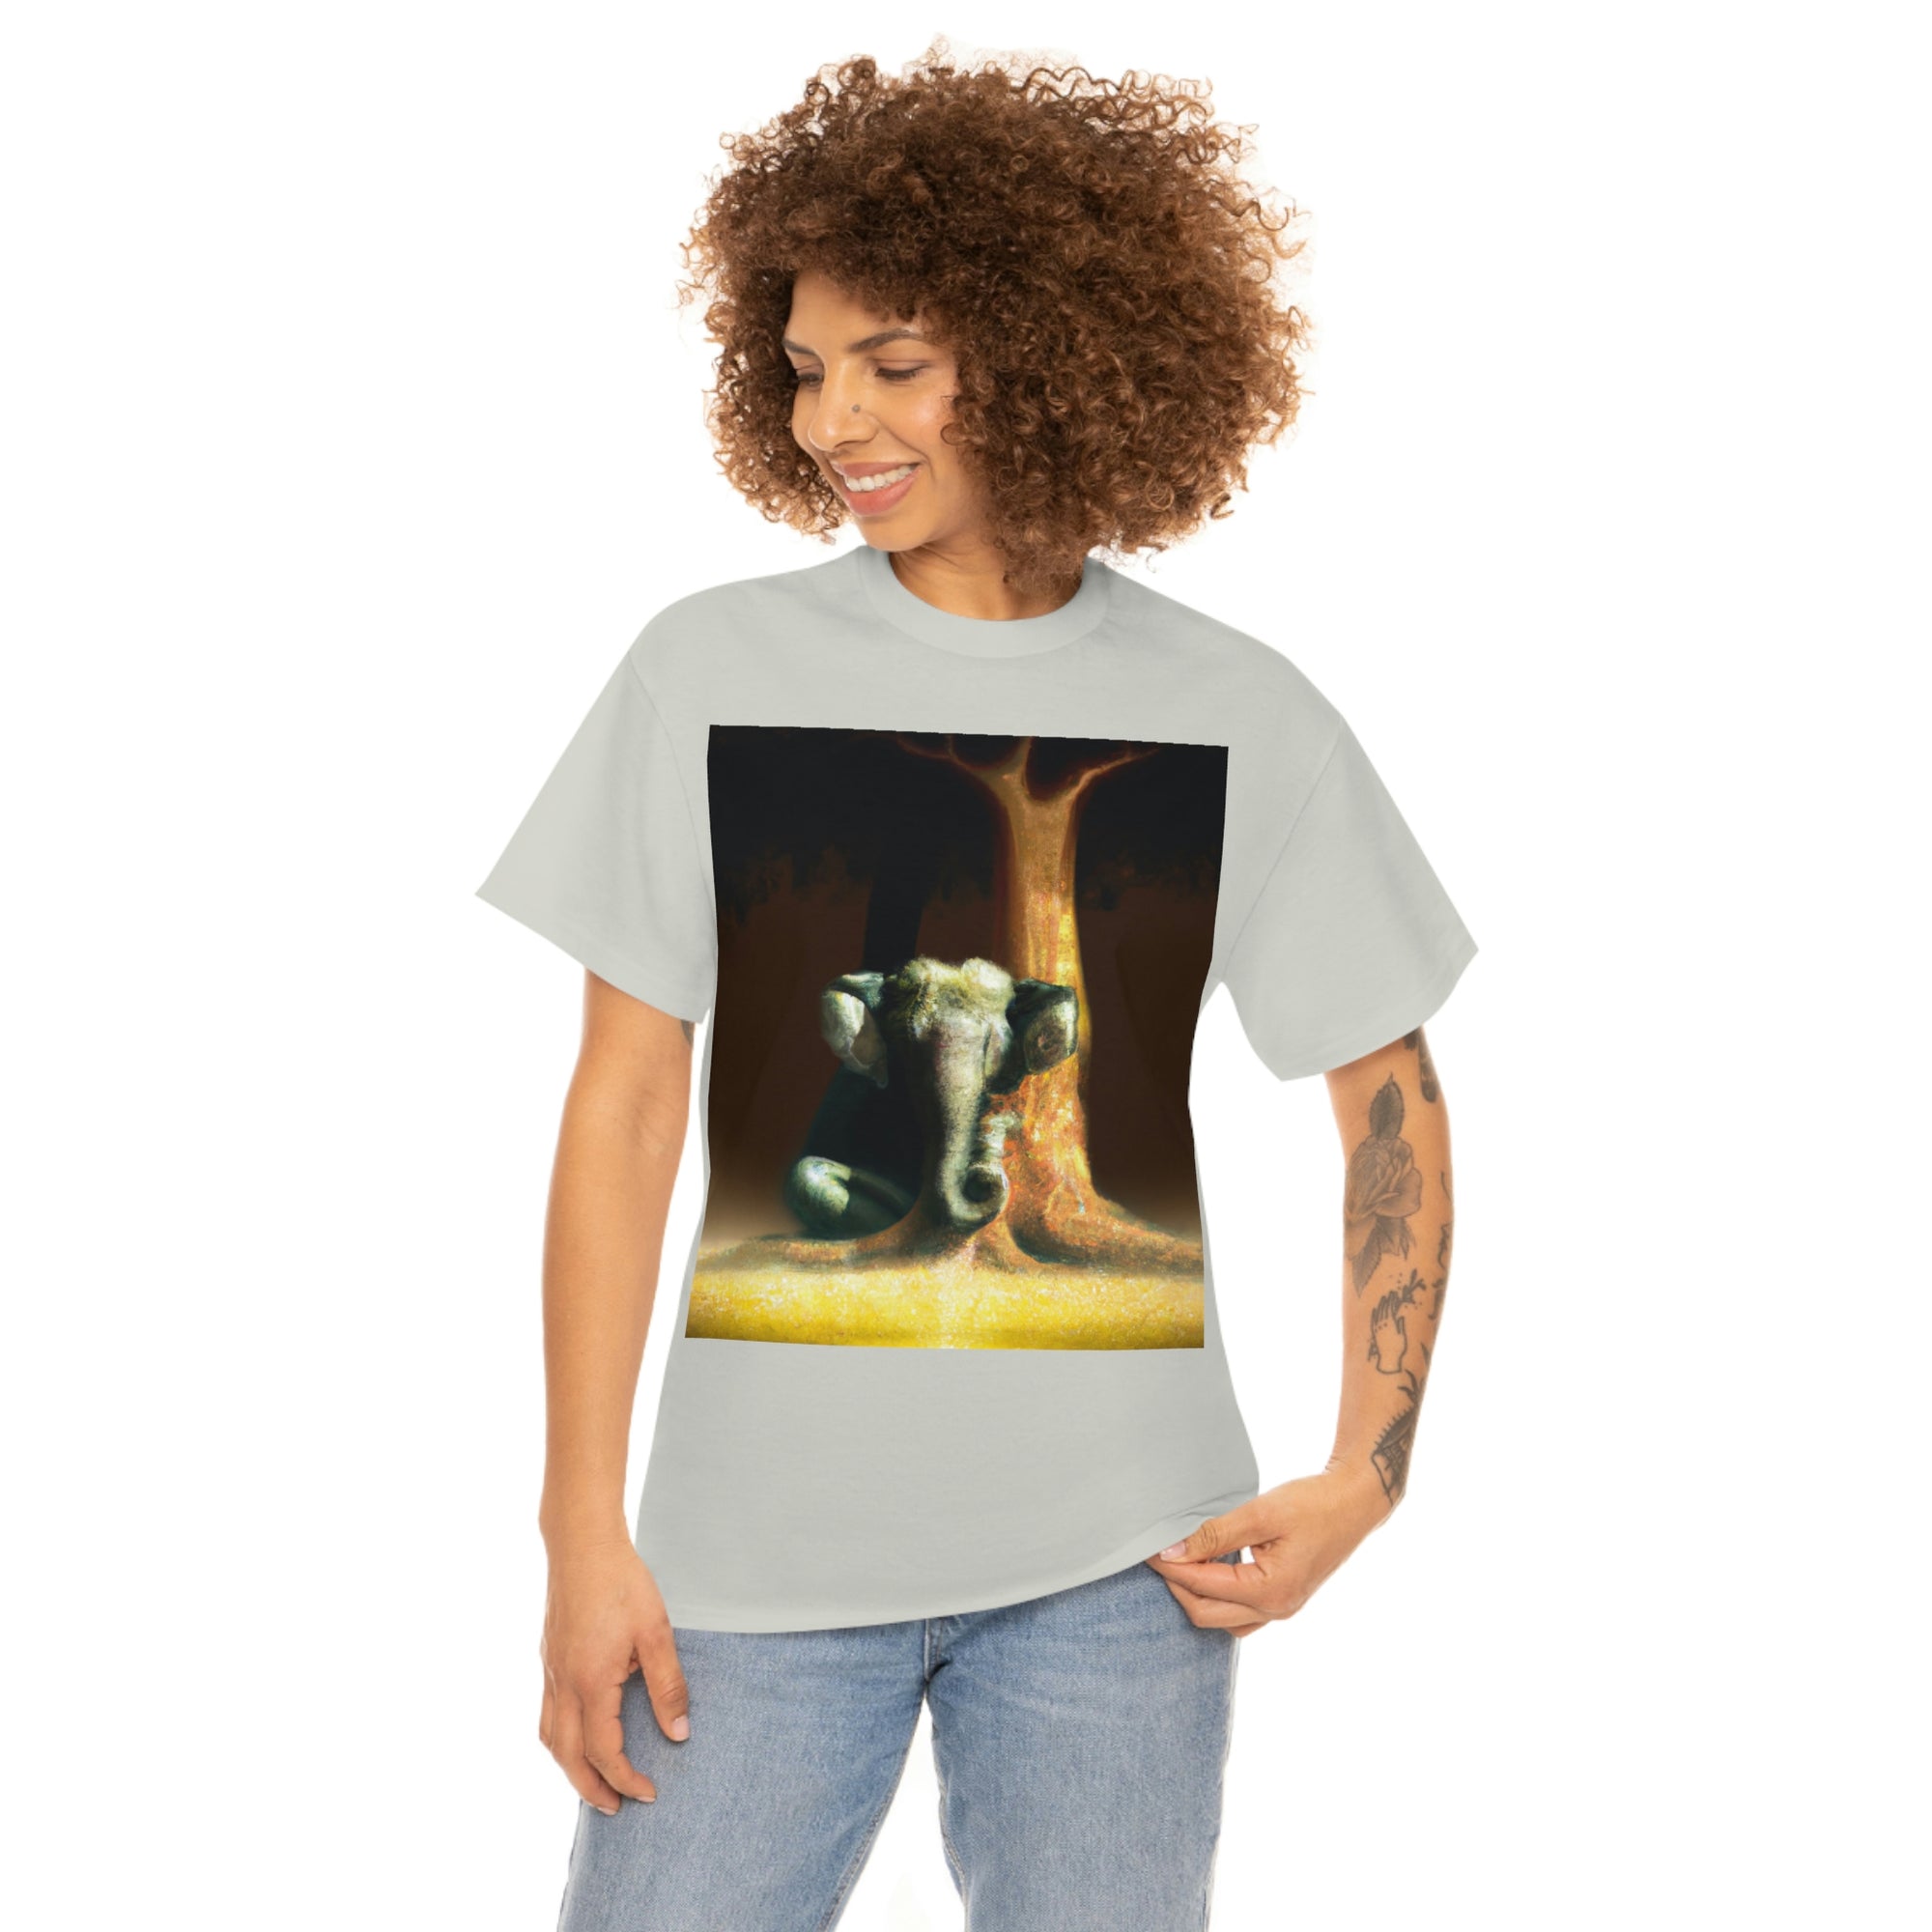 "Enlightened" Elephant - Unisex T-shirt